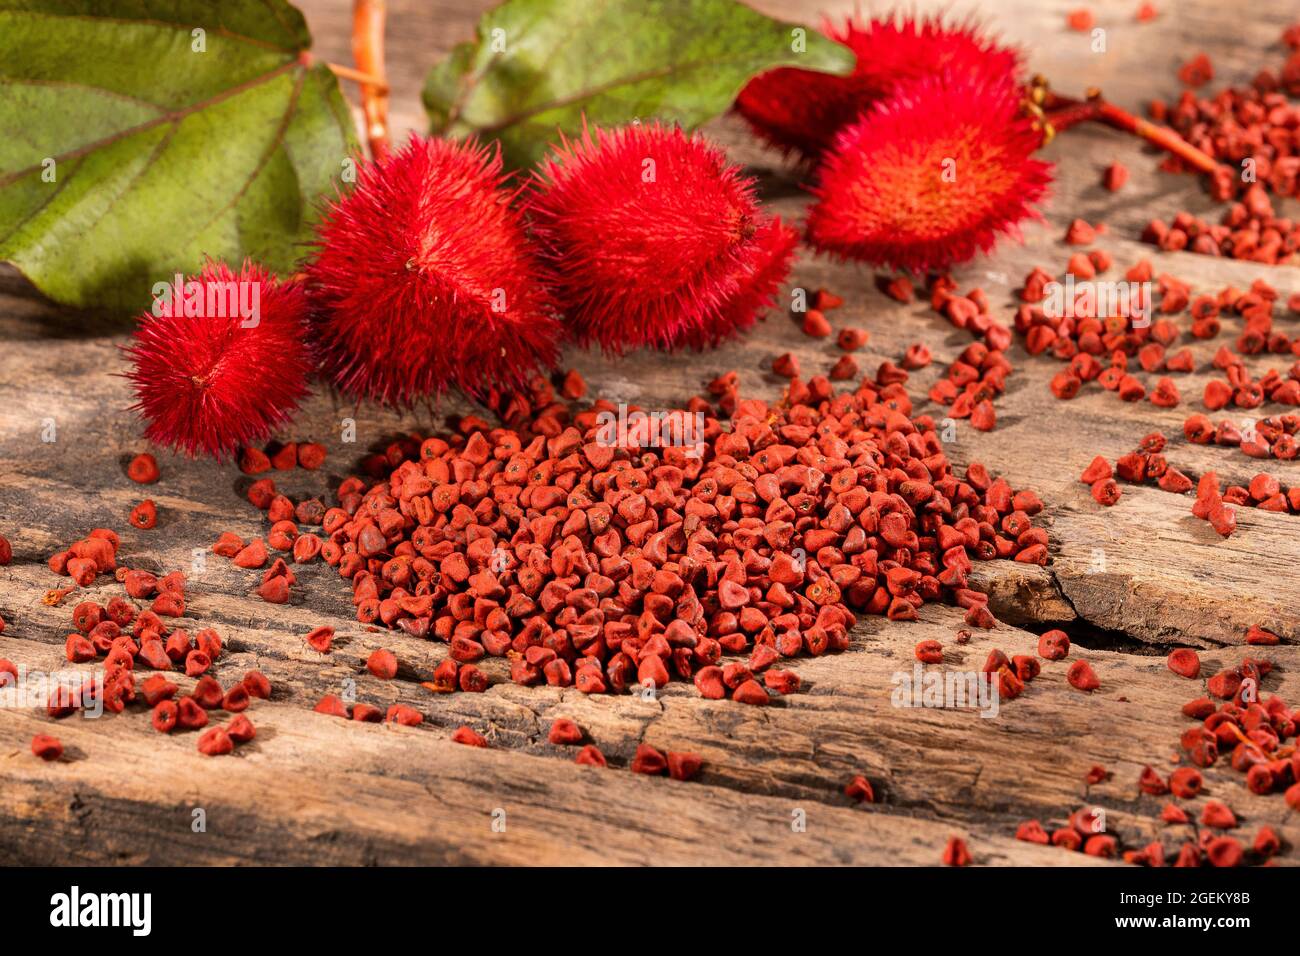 red pigment from annatto seeds - Bixa orellana Stock Photo - Alamy